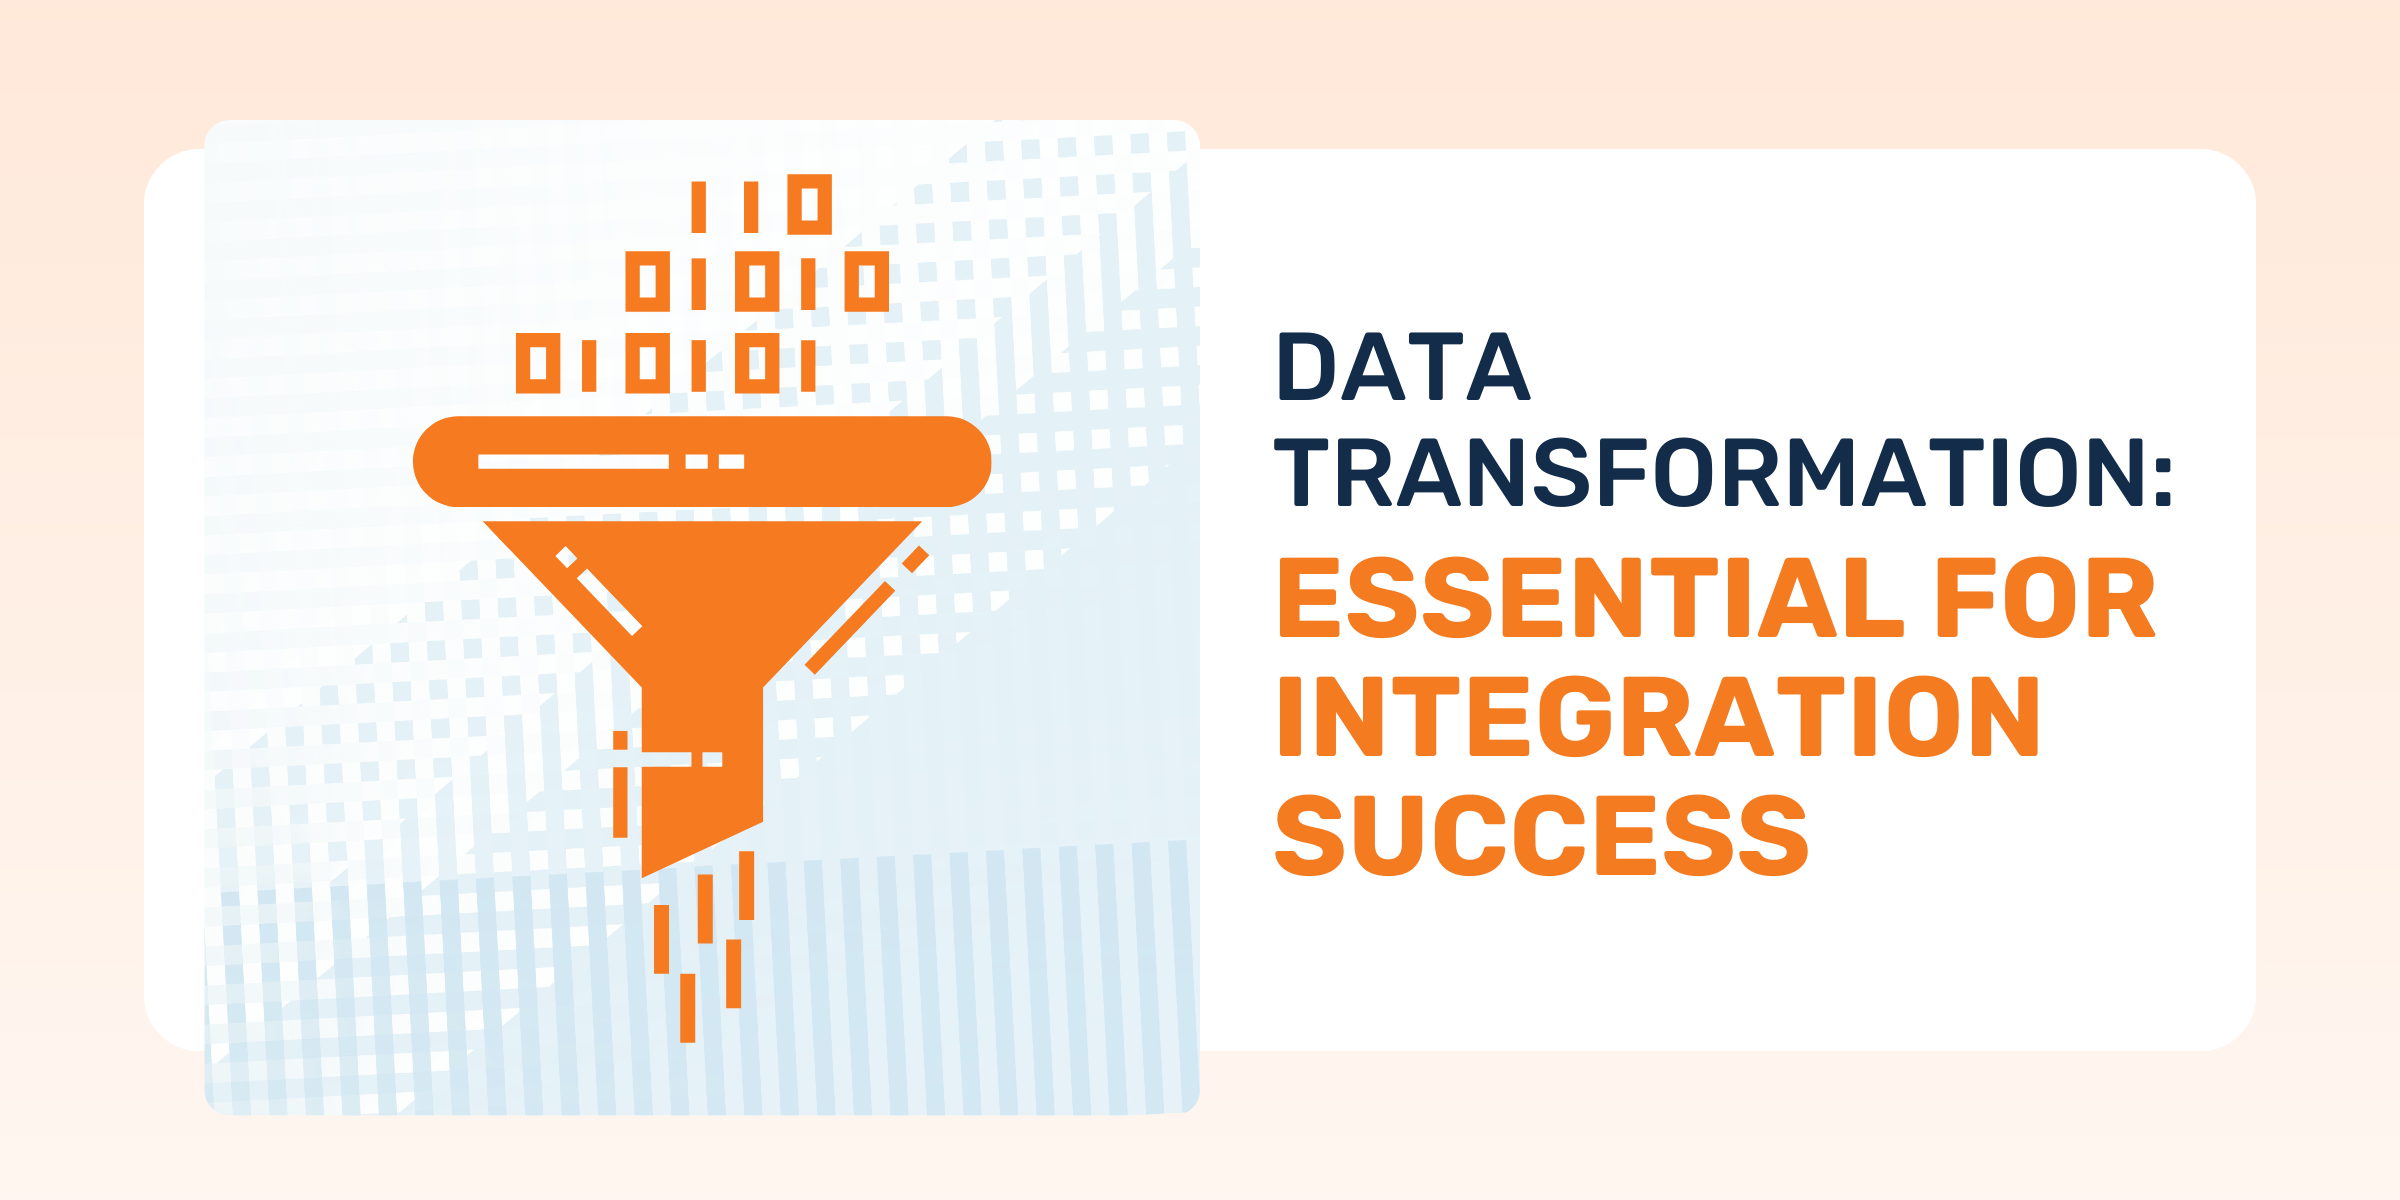 Dara Transformation: Essential for Integration Success